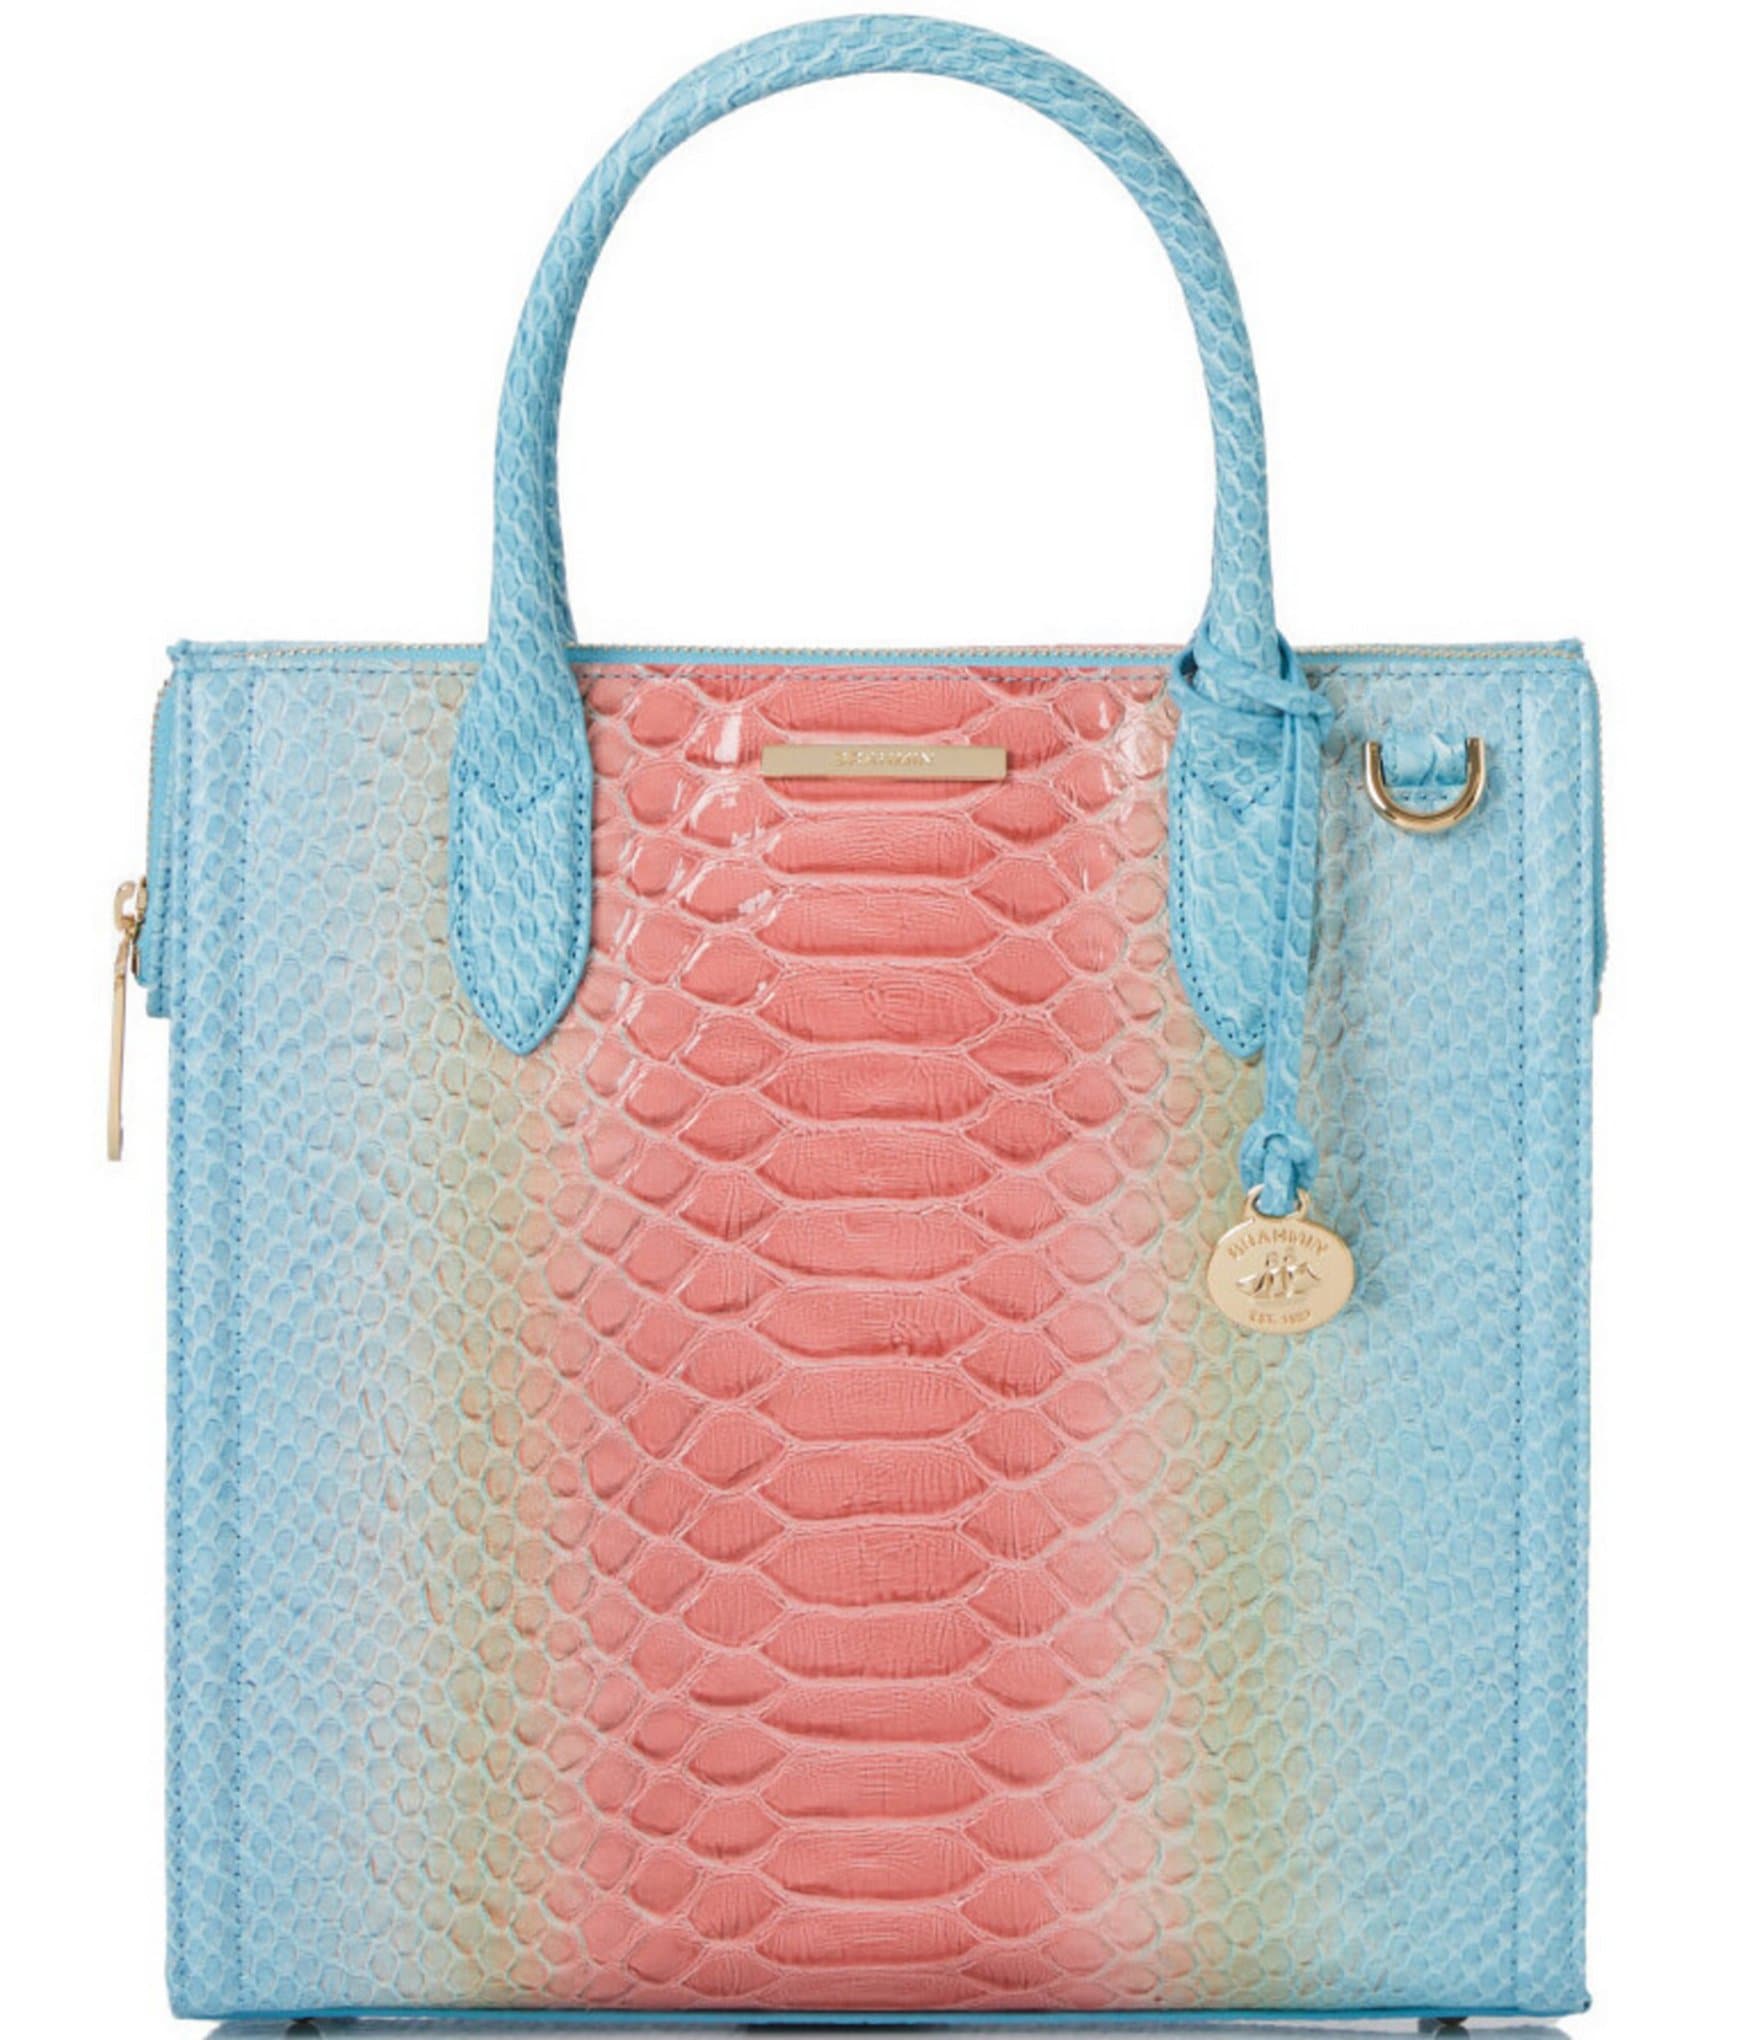 Betsey Johnson Handbag Purse Pink Heart Python Metallic Chain Silver Bag 